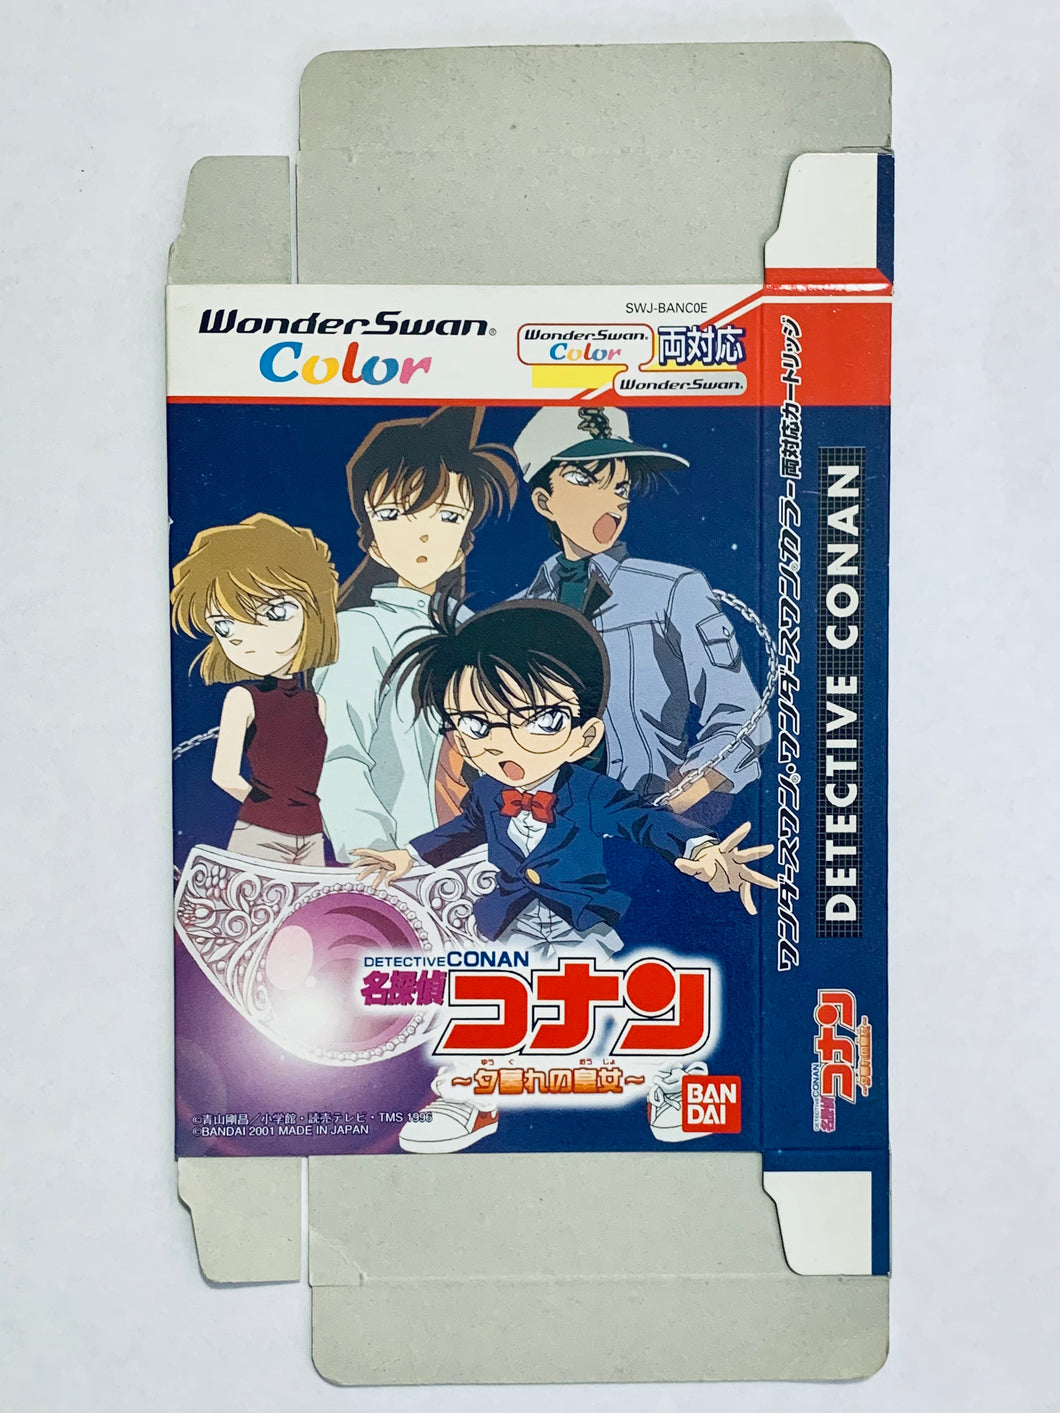 Meitantei Conan: Yuugure no Ouju - WonderSwan Color - WSC - JP - Box Only (SWJ-BANC0E)